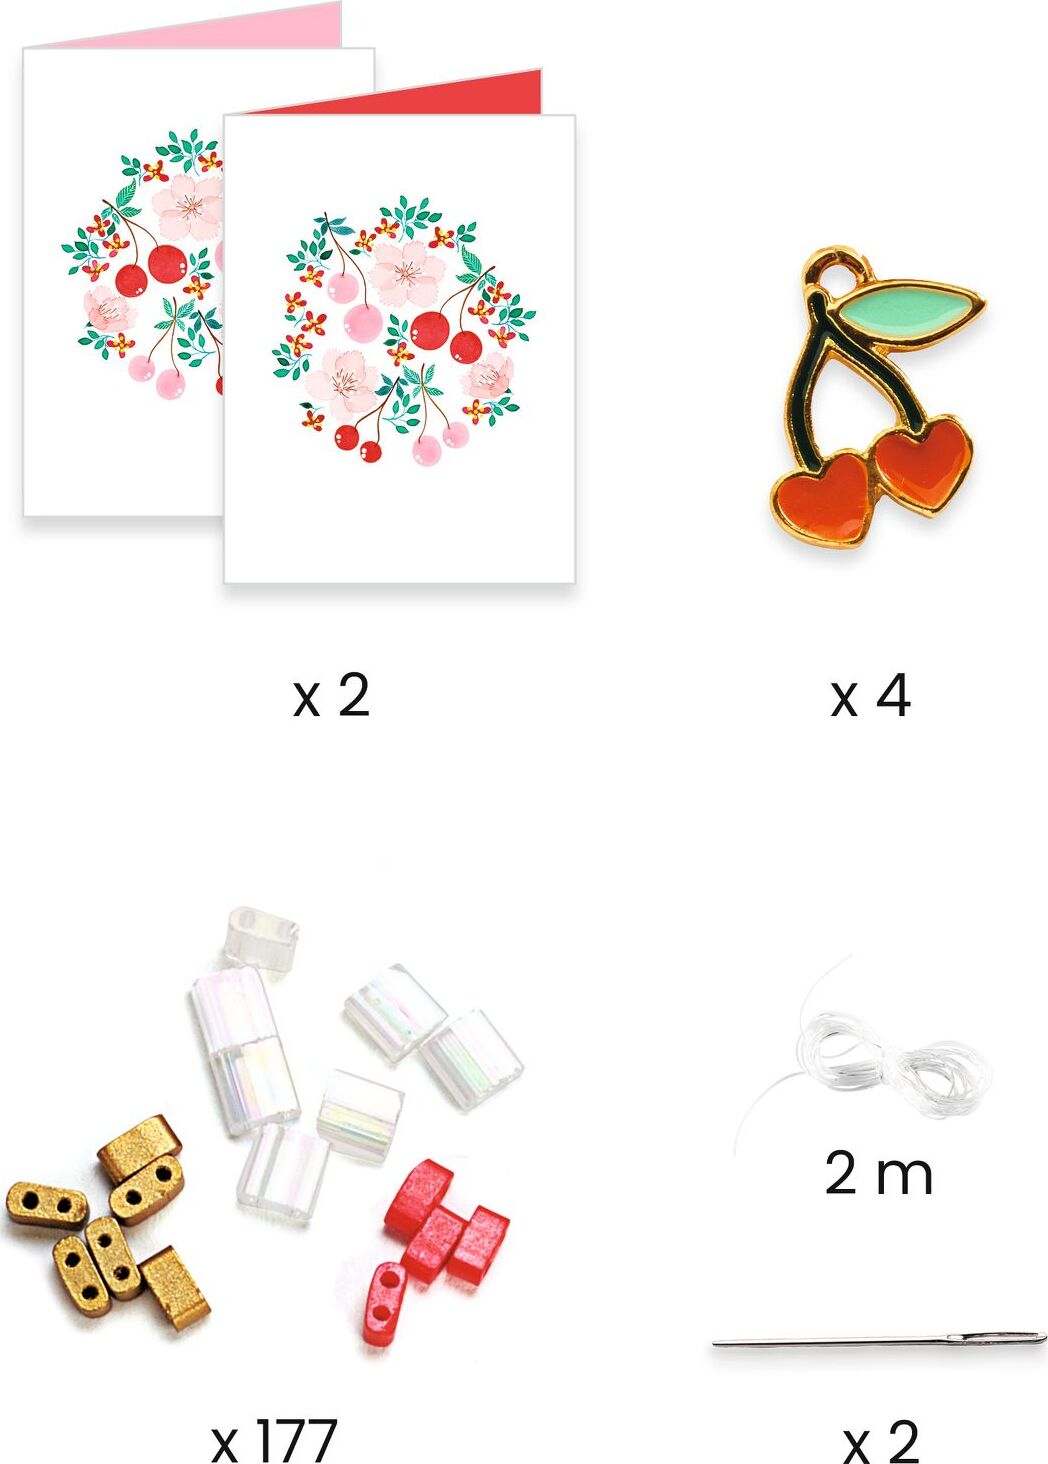 Tila and Cherries Beads & Jewelry Kit